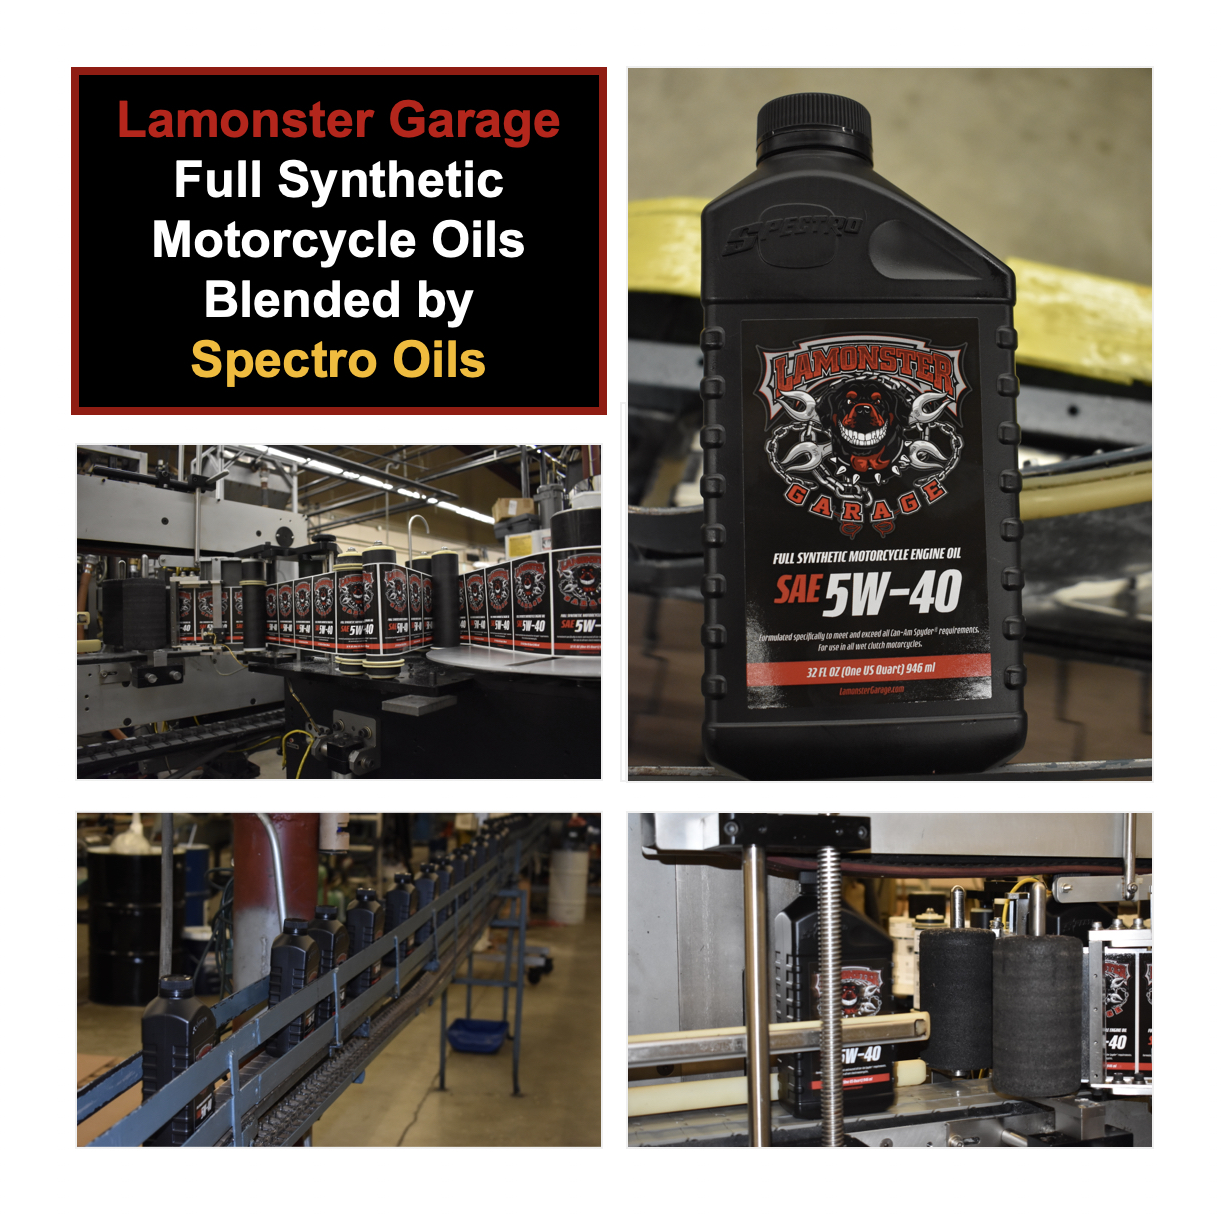 Lamonster Garage Motorcycle Oil